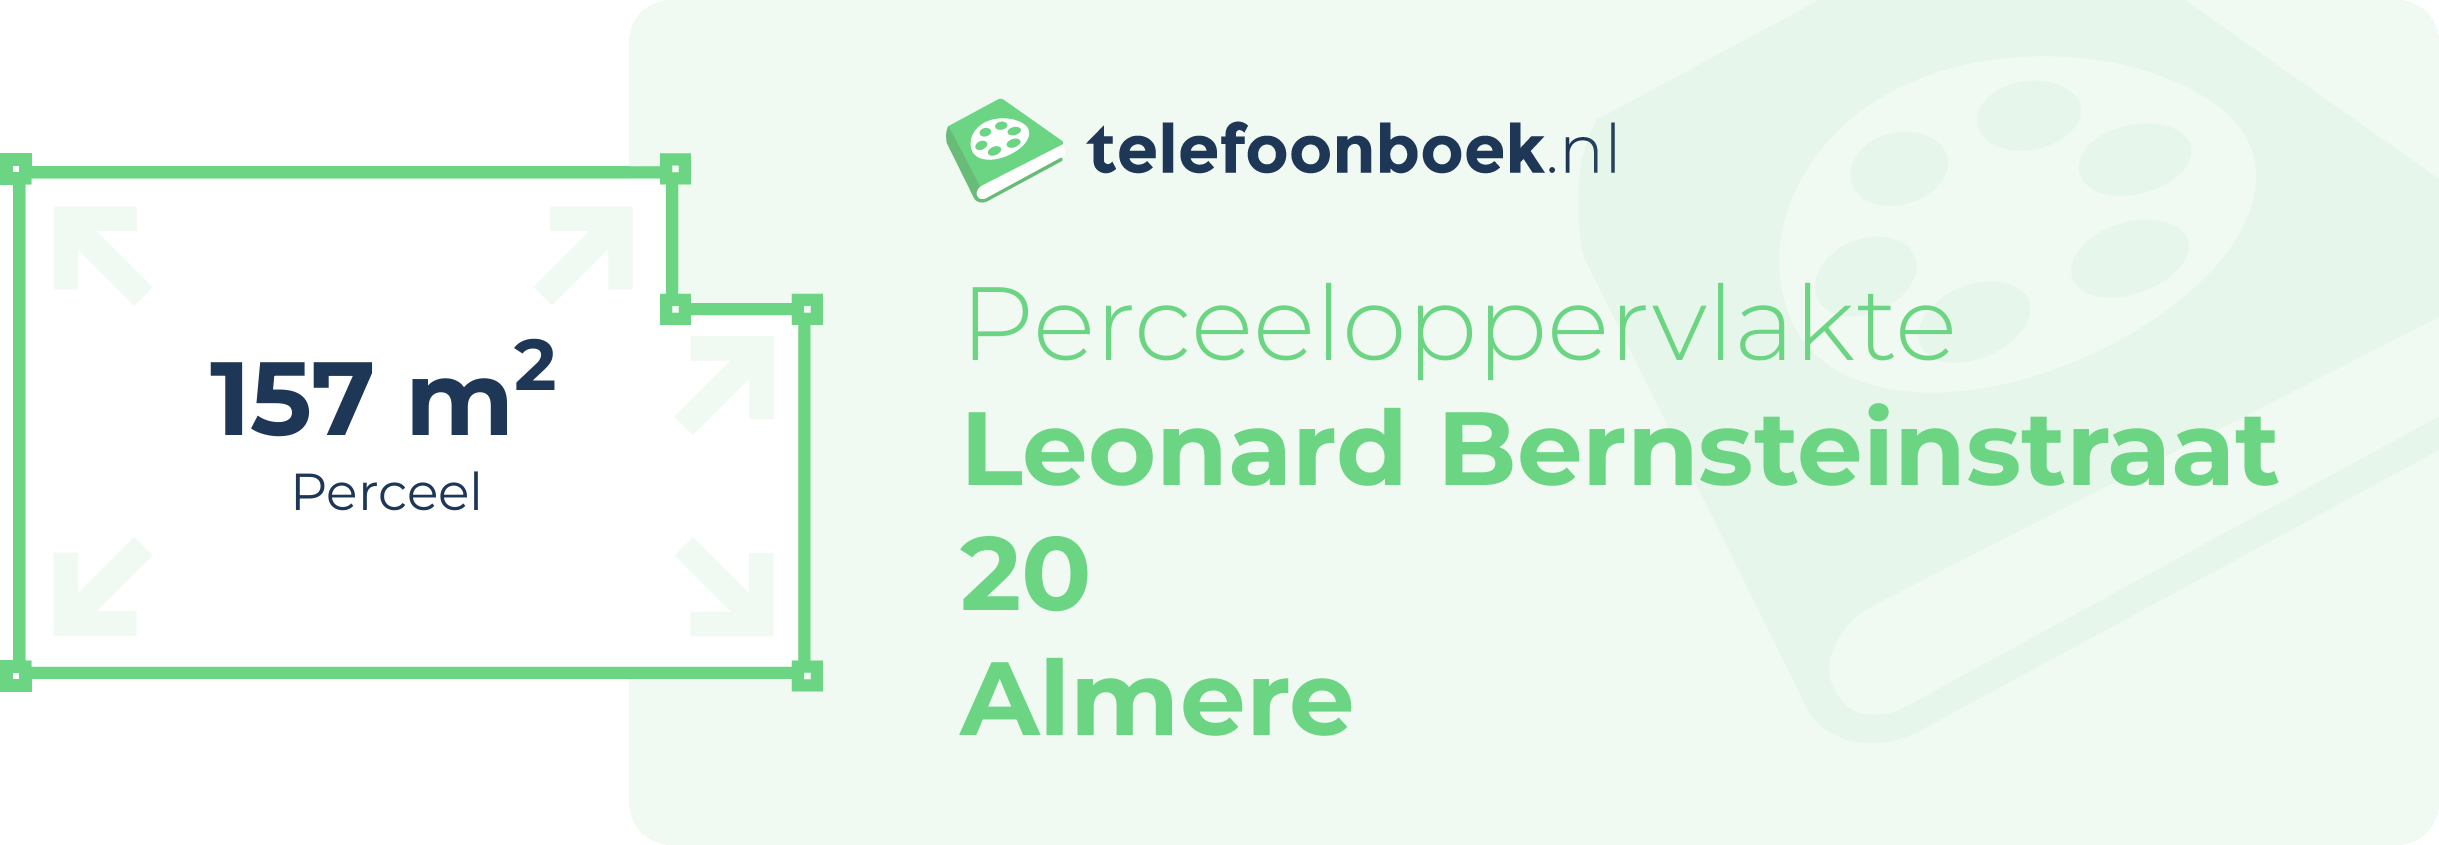 Perceeloppervlakte Leonard Bernsteinstraat 20 Almere